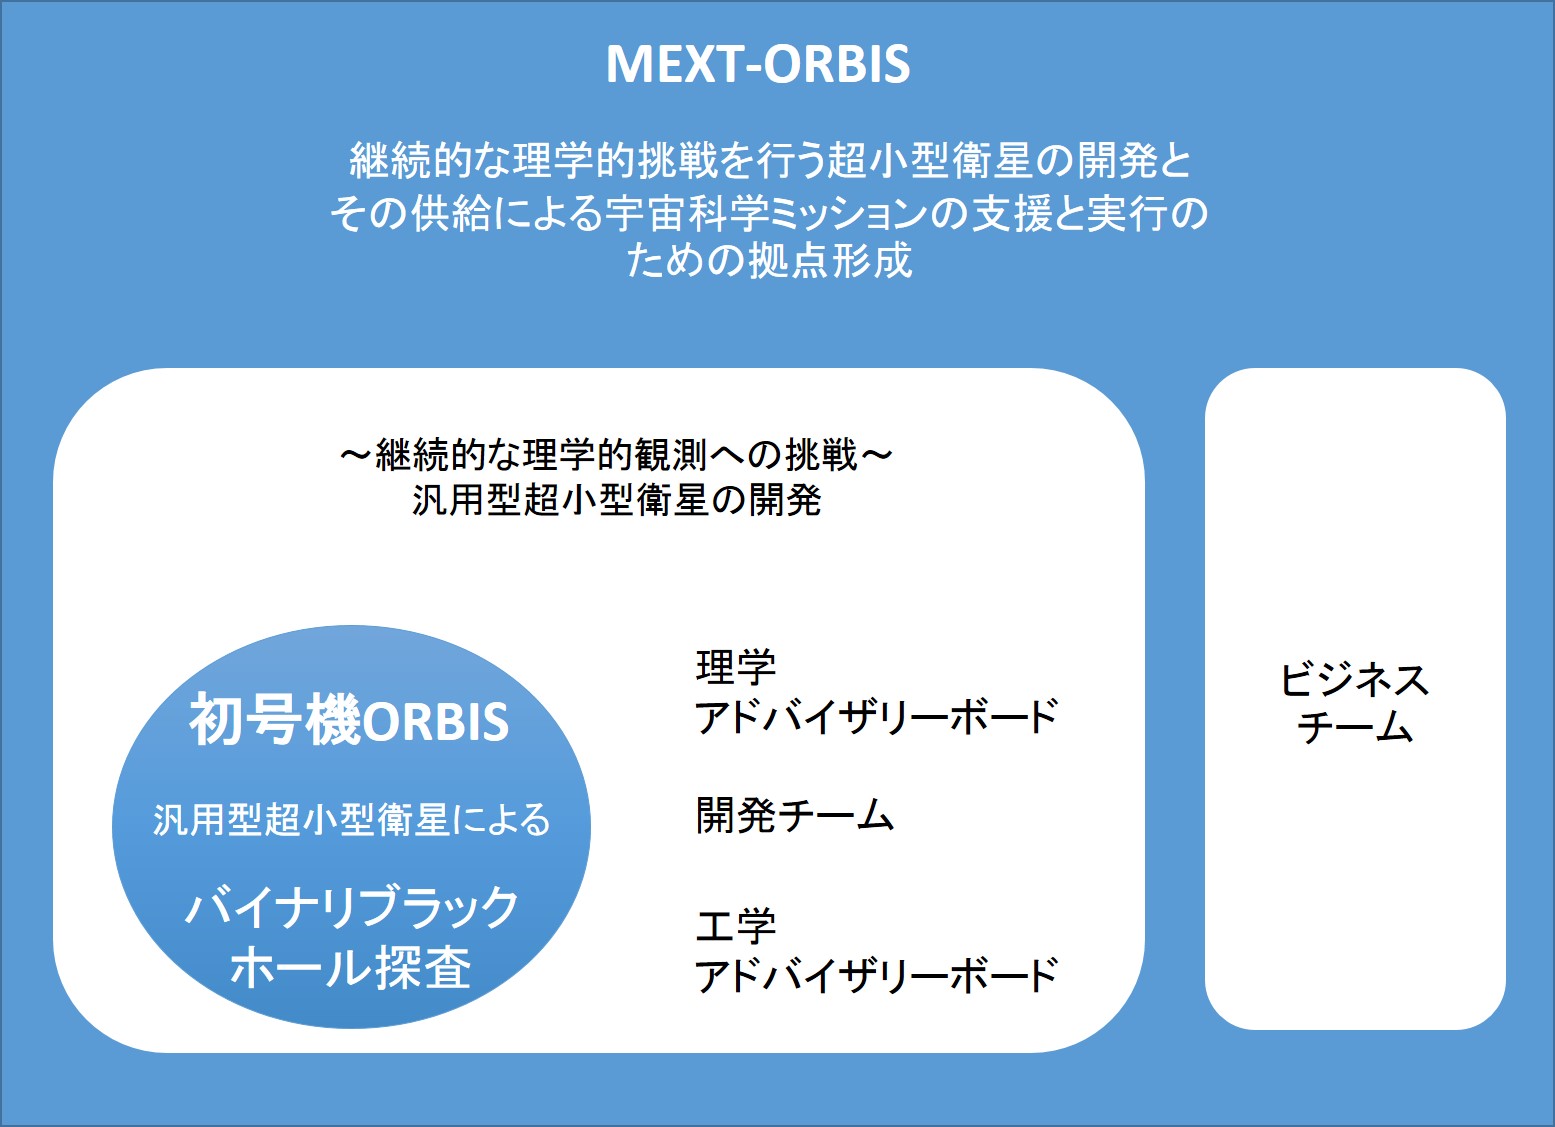 MEXT-ORBIS